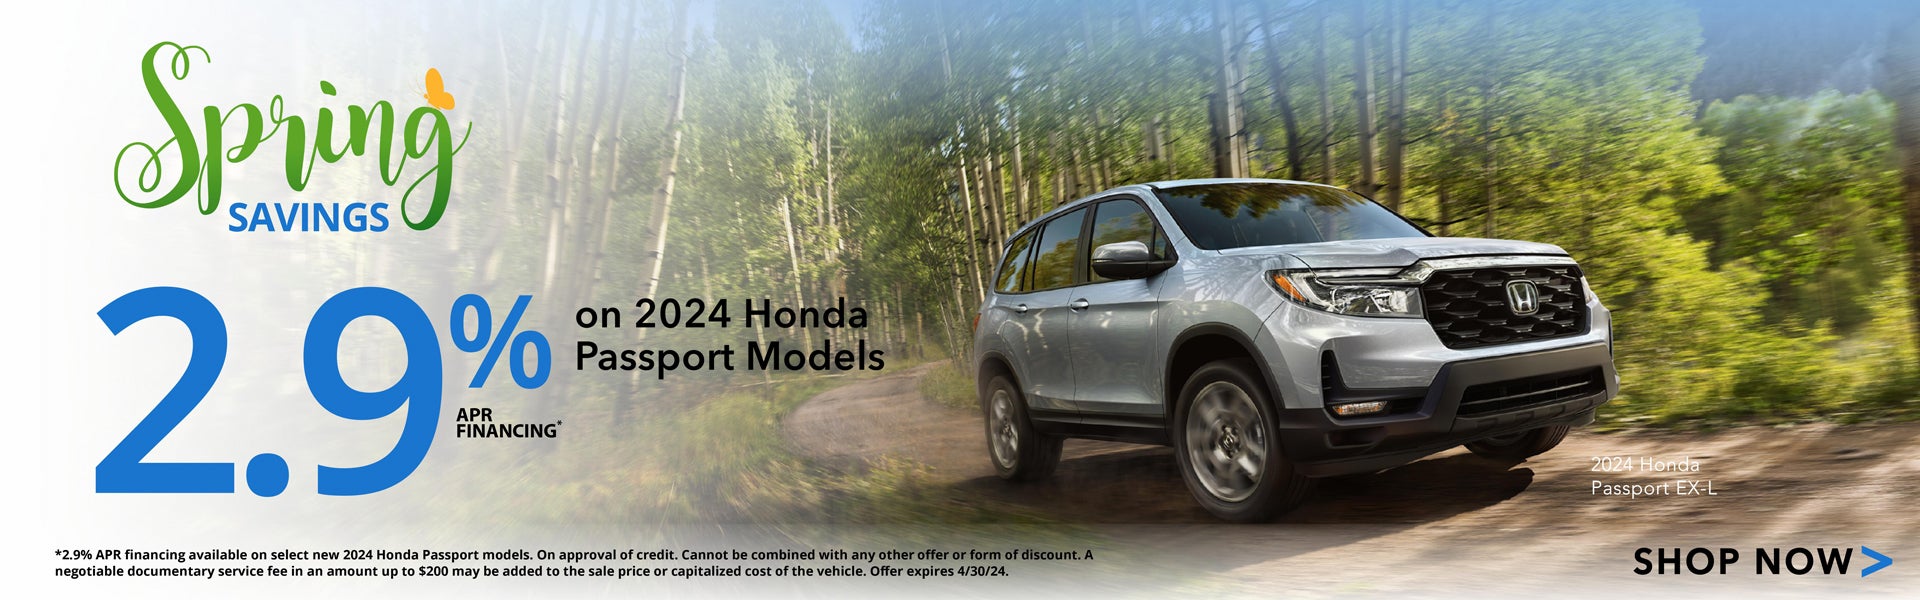 3.9% on 2024 Honda Passport Models